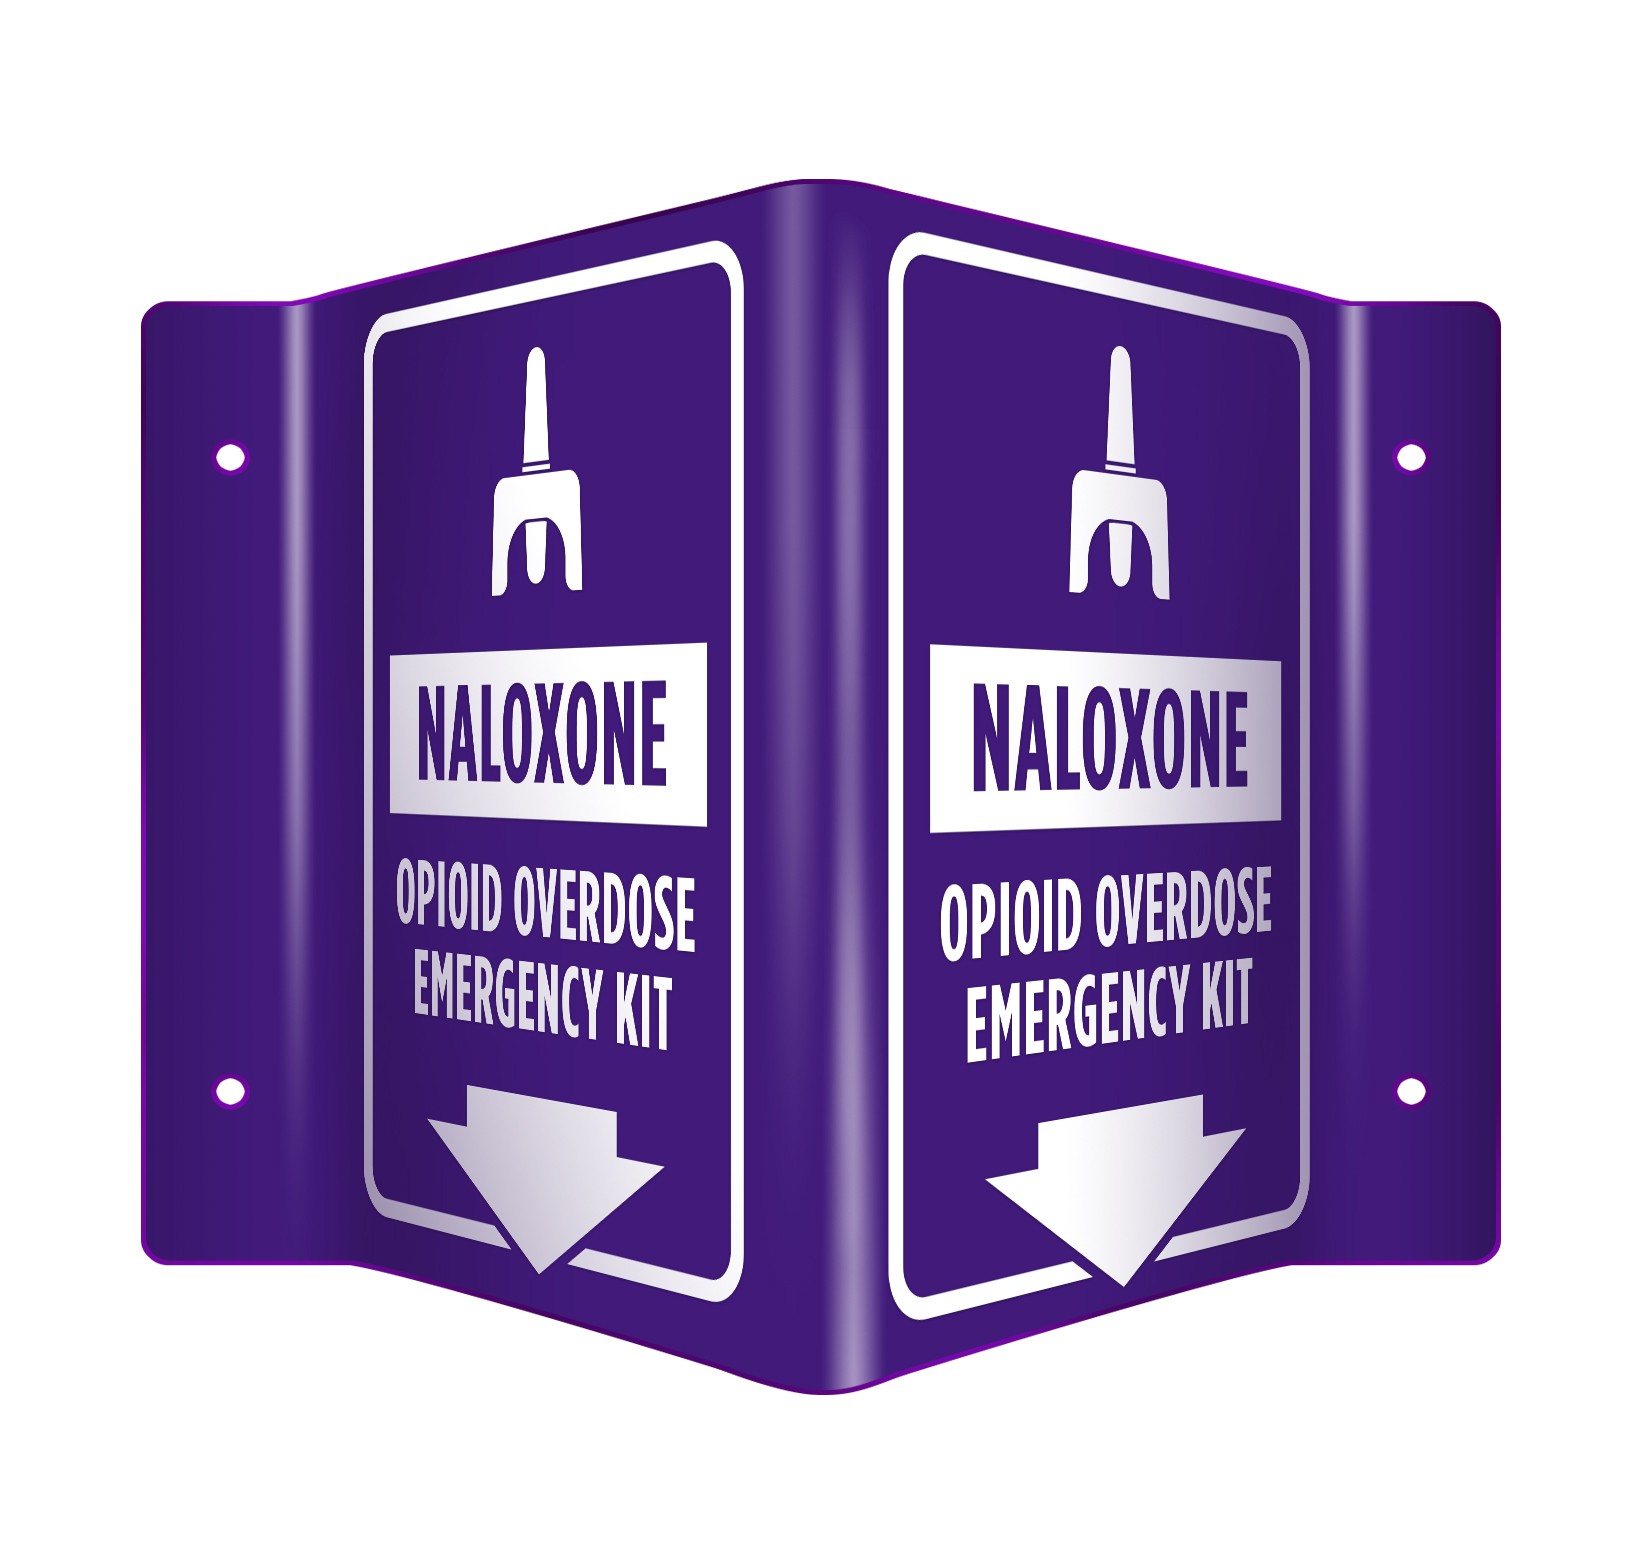 Overdose Emergency Kit Sign for Naloxone Narcan